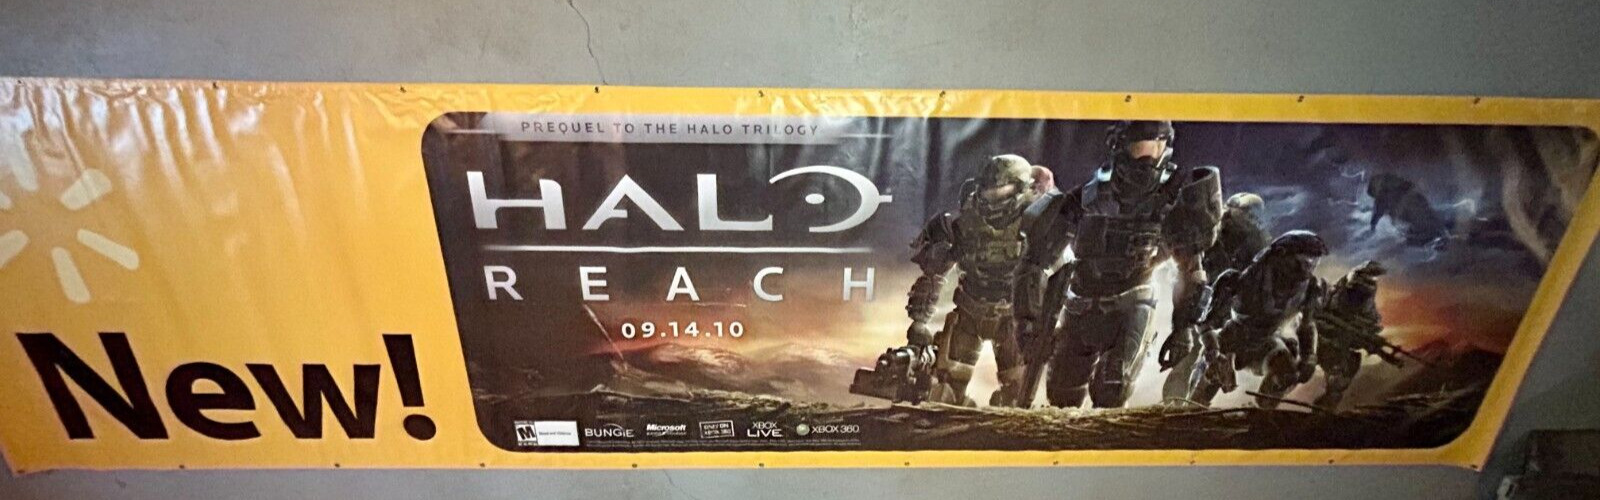 HALO REACH 2010 Vinyl Banner Advertising the Launch of Halo Reach 20 X 5 FEET